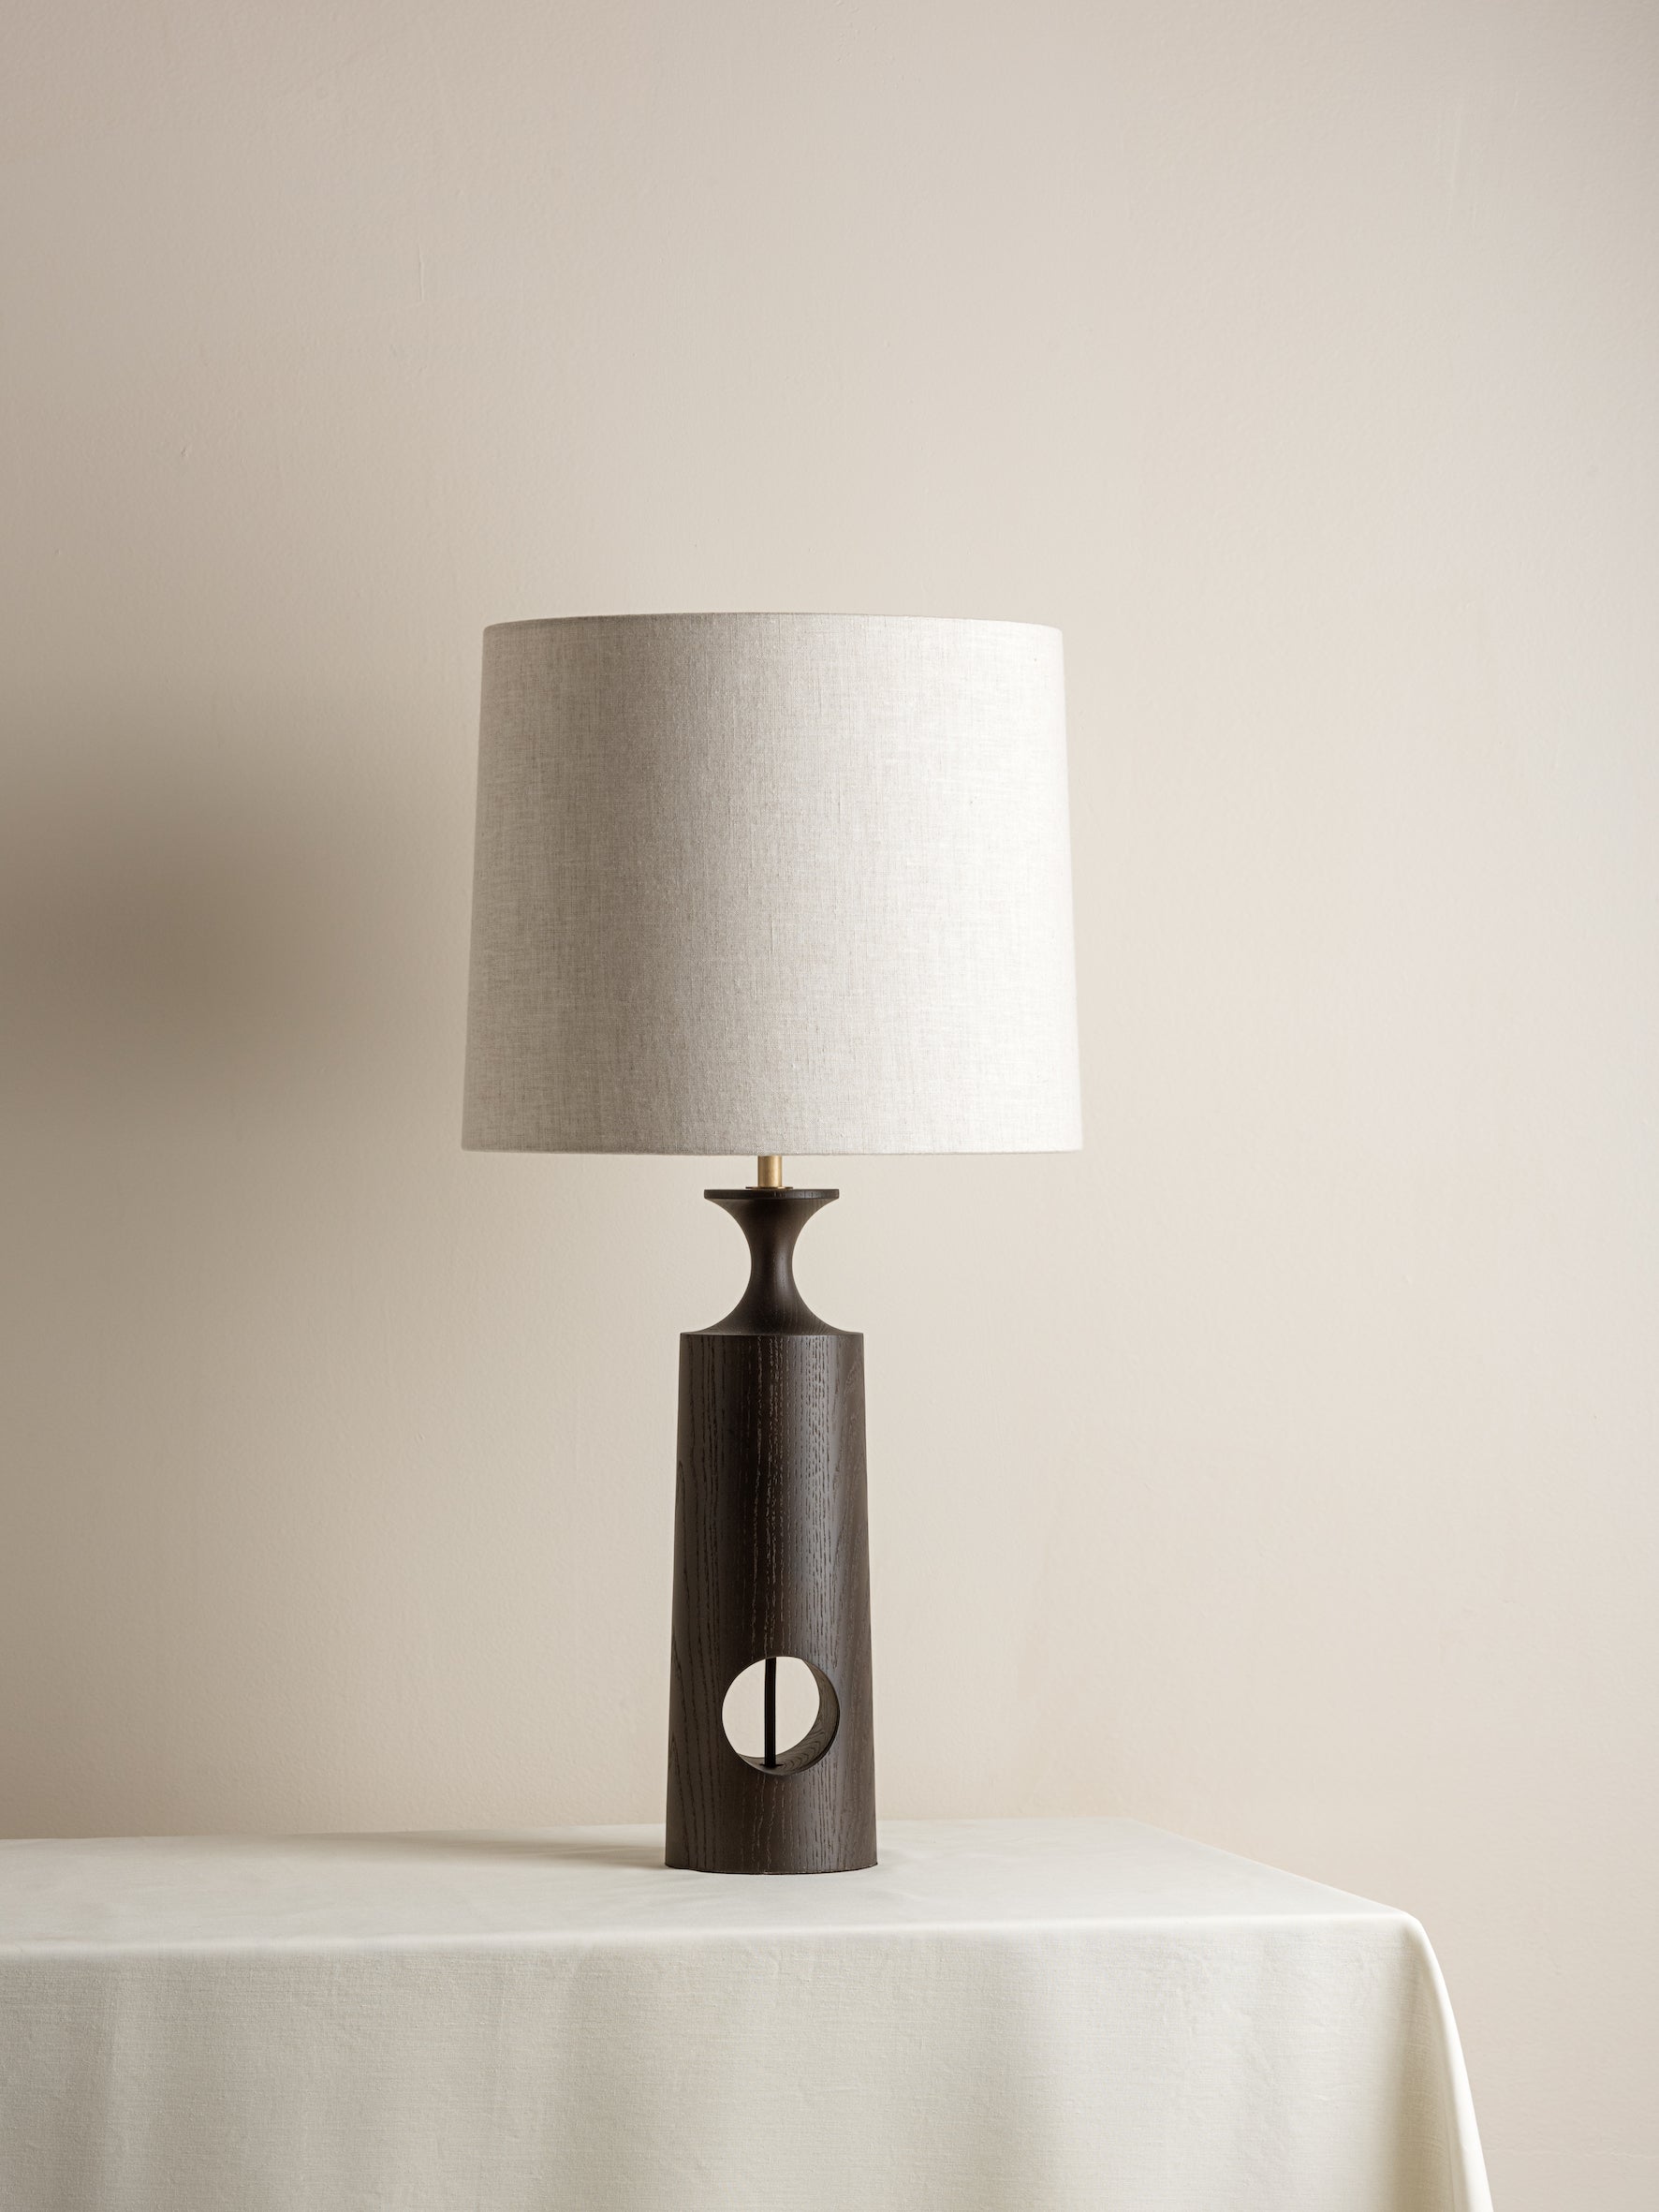 Morton - dark wood and linen table lamp | Table Lamp | Lights & Lamps | UK | Modern Affordable Designer Lighting